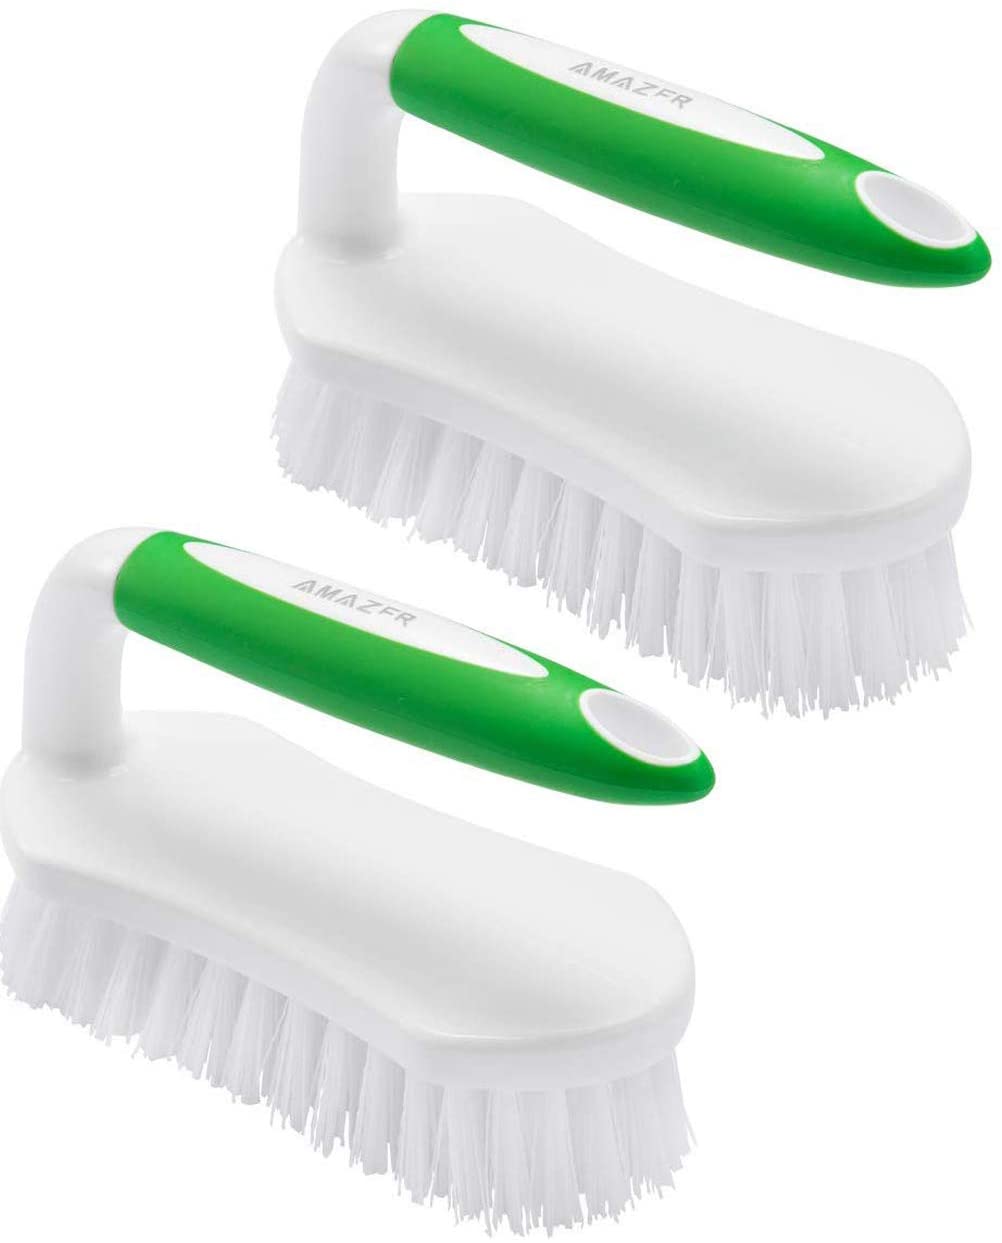 Amazer Ergonomic Stiff Bristled Cleaning Brushes, 2-Pack